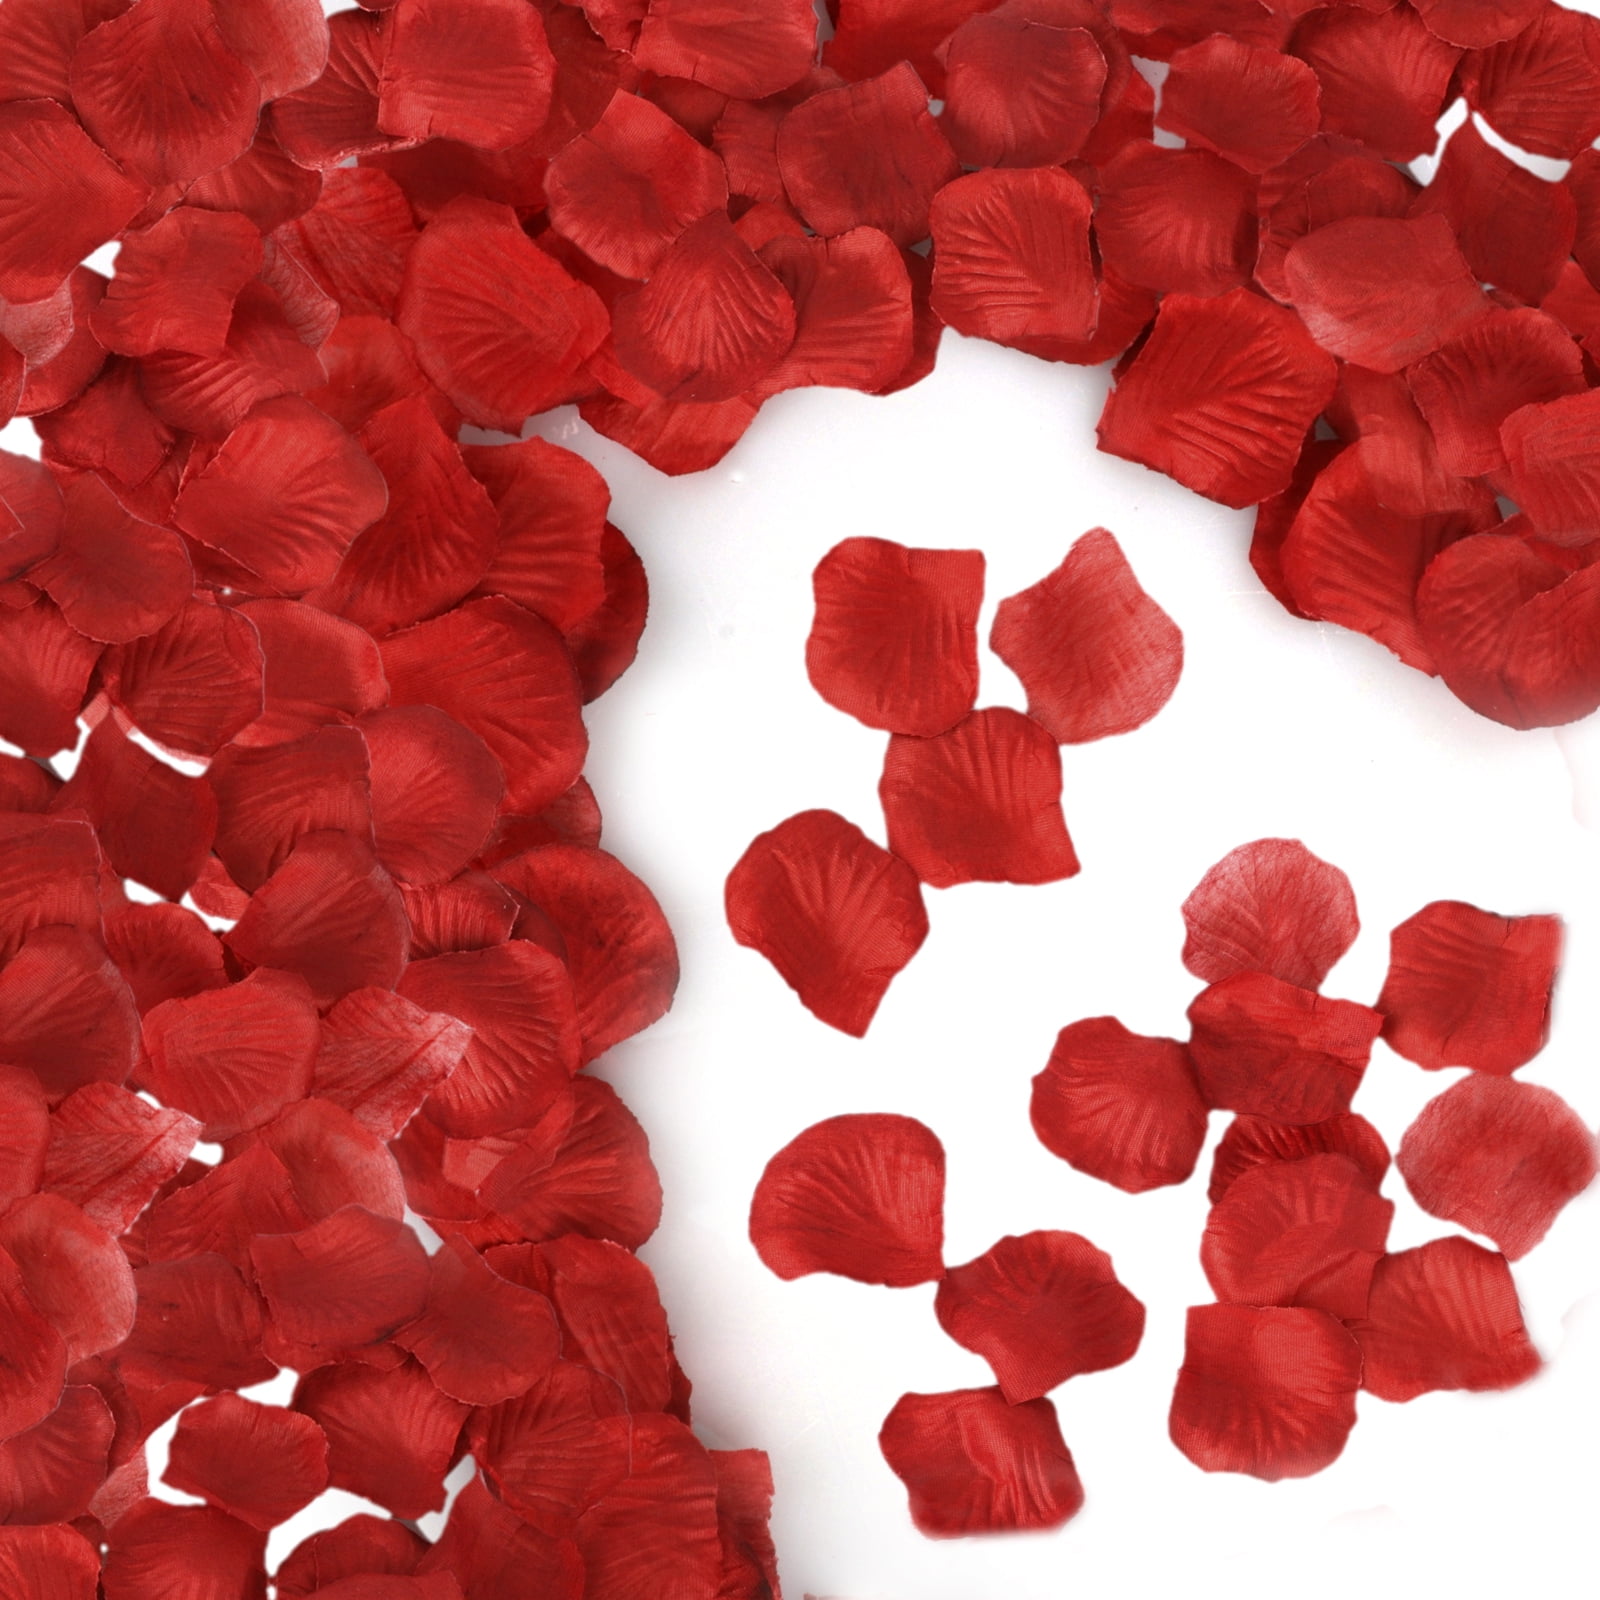 1000x Artificial Rose Petals Wedding Home Party Romantic Decor Various Colors 